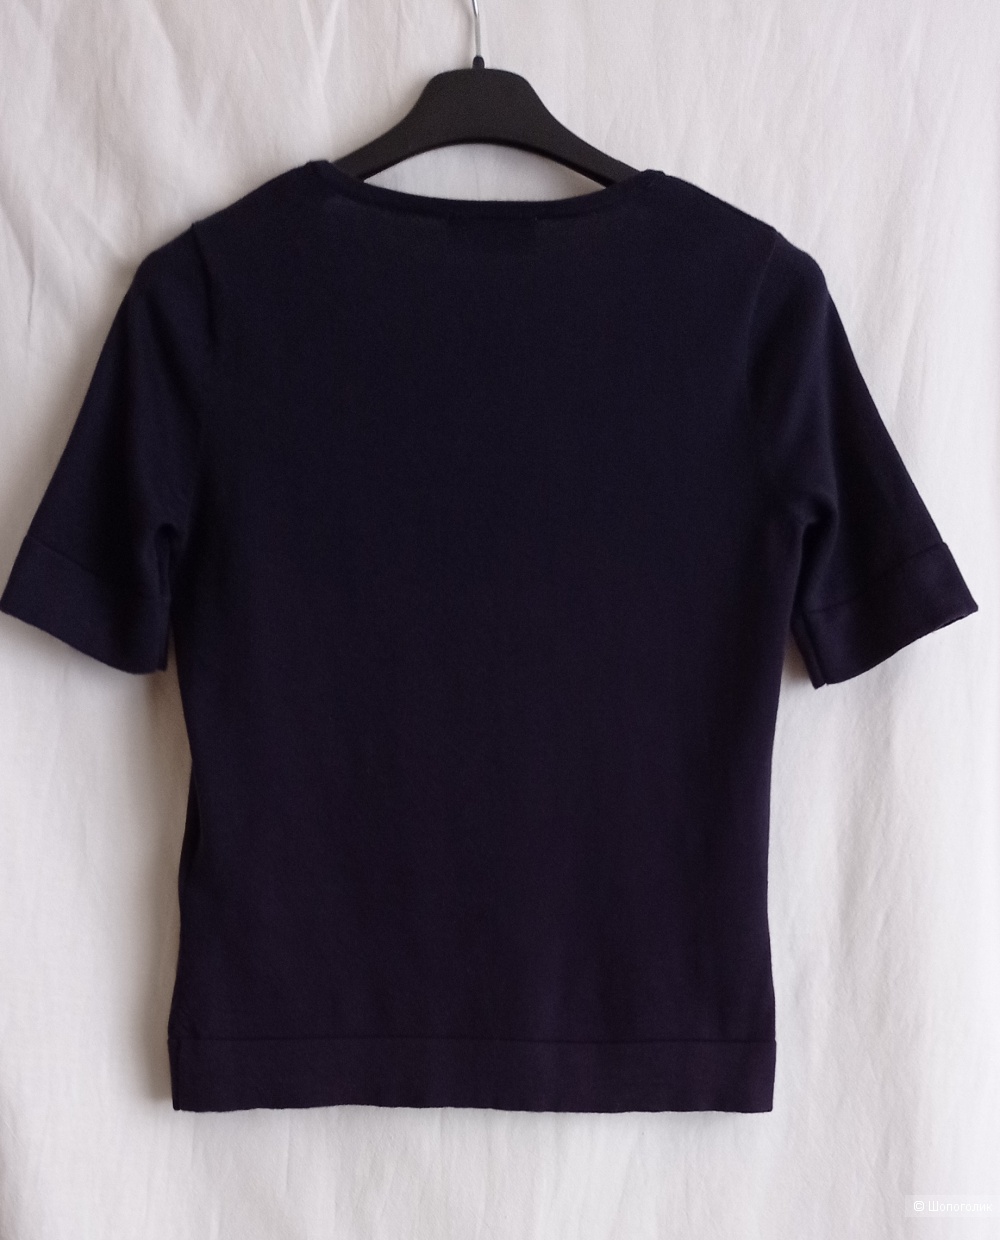 Джемпер кофта футболка Peter Hahn размер 44